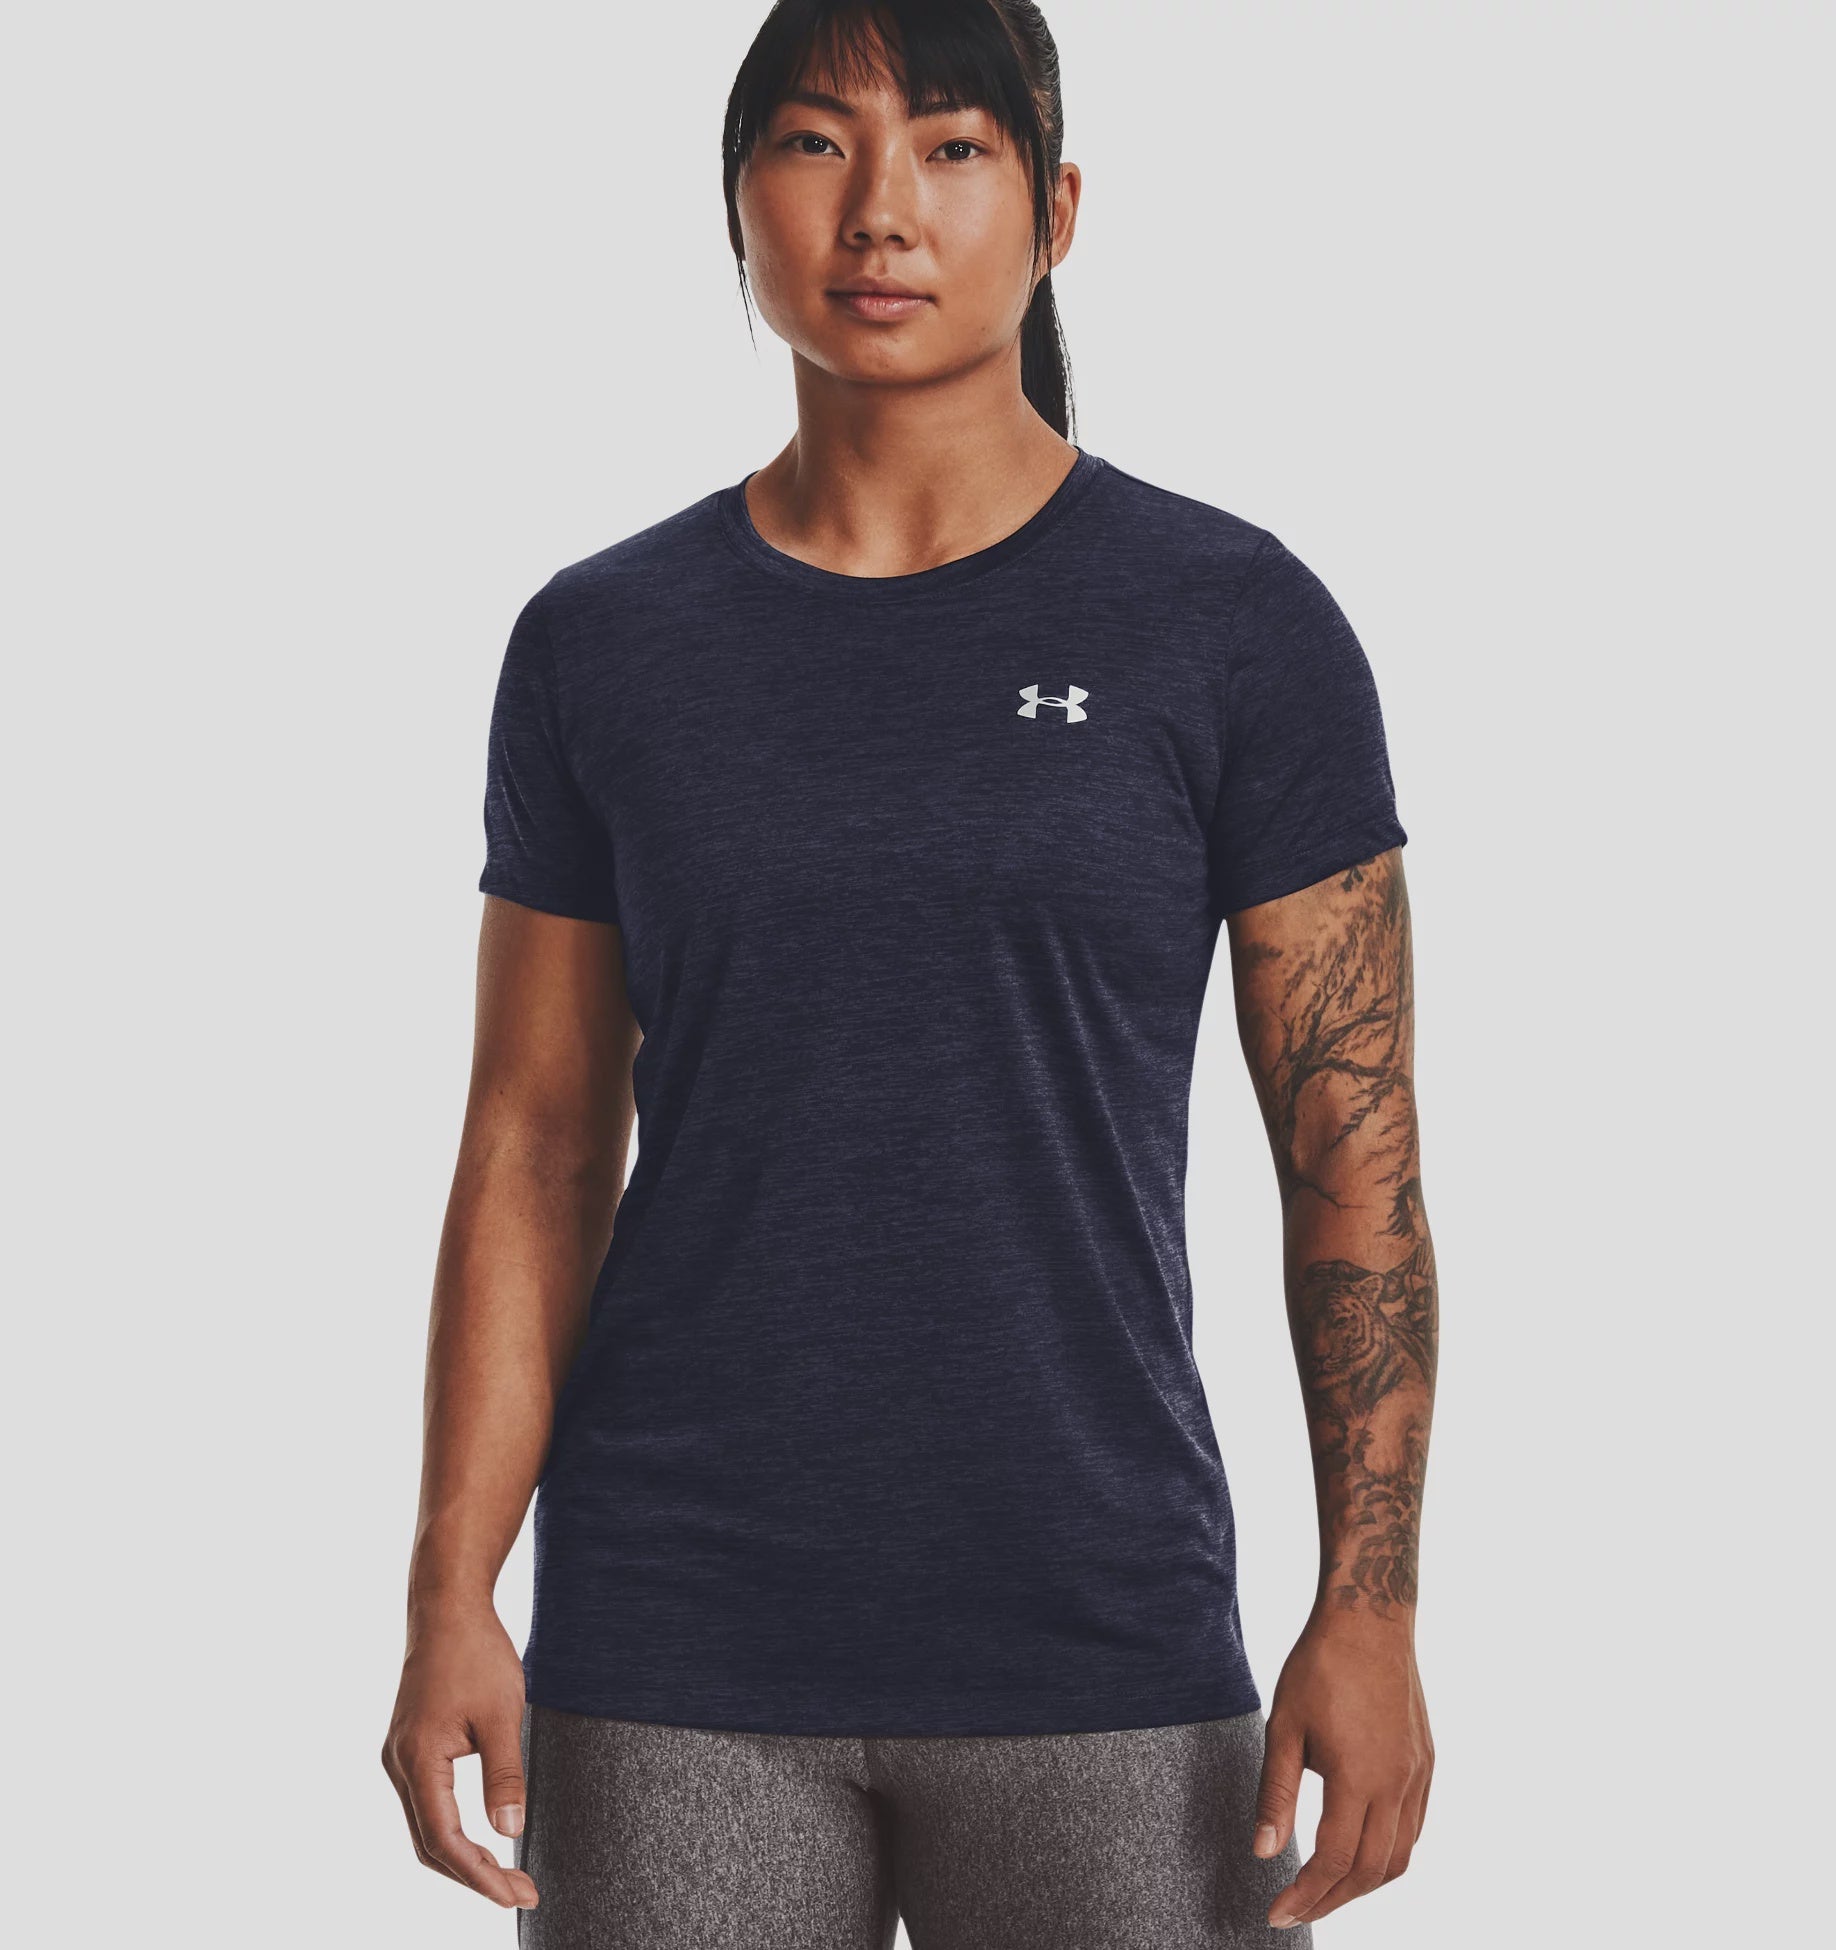 Under Armour Women's Tech Twist T-Shirt - Navy-Cadet-Silver-Bruntsfield Sports Online